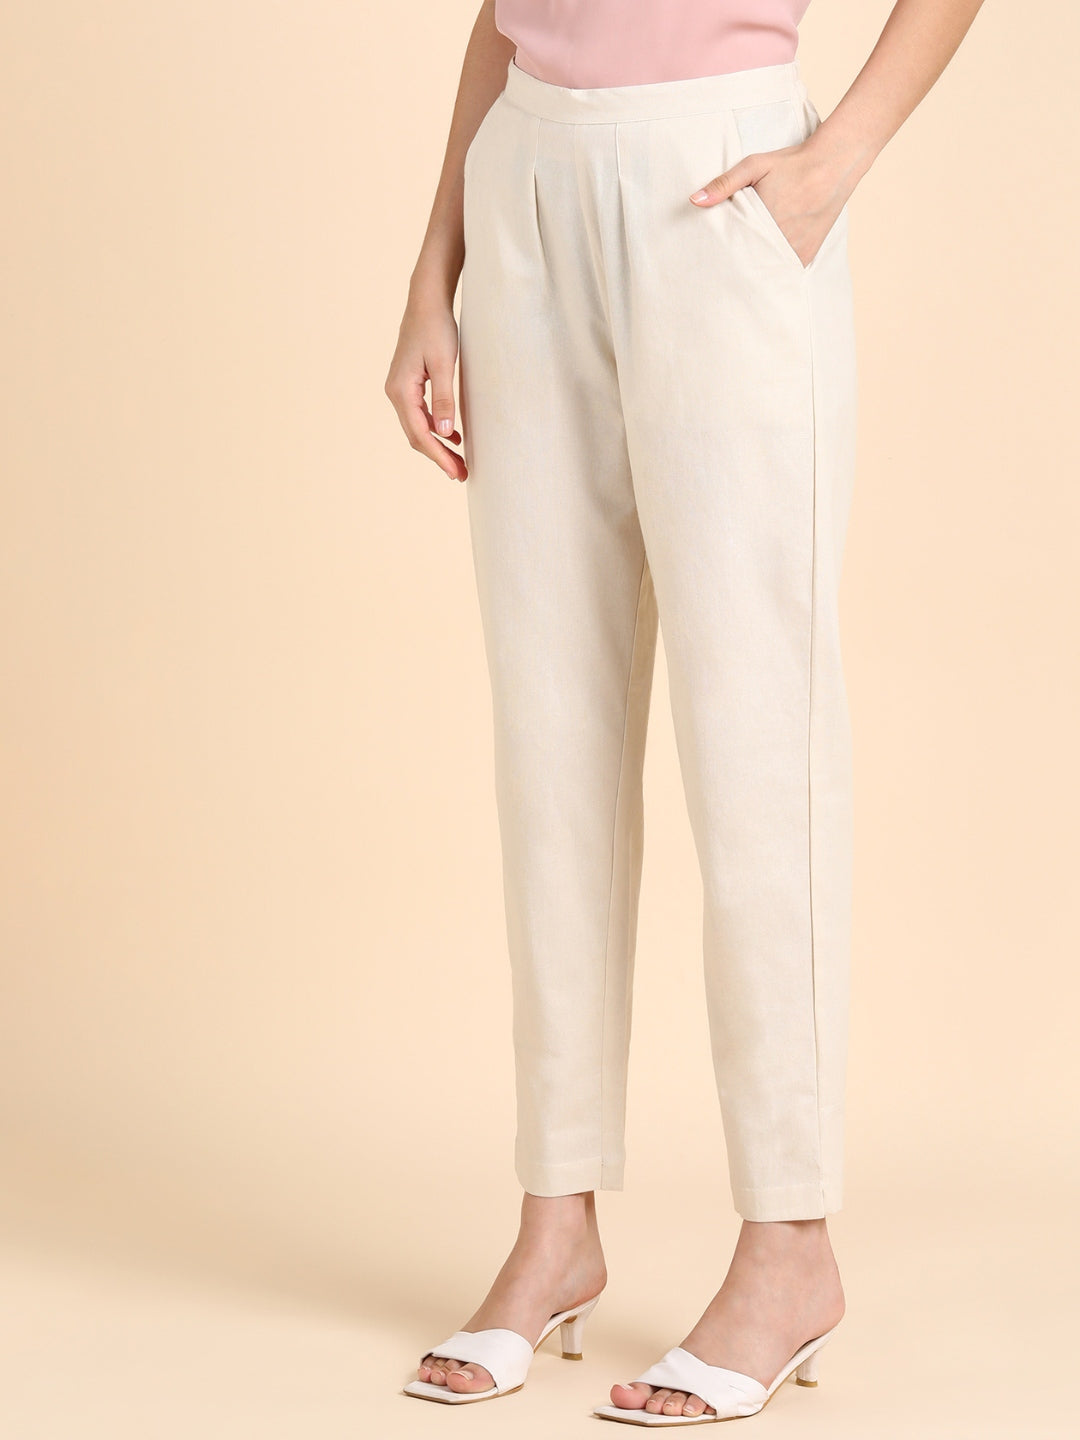 Soft Cotton Solid Color Pant - Cream/Off-White